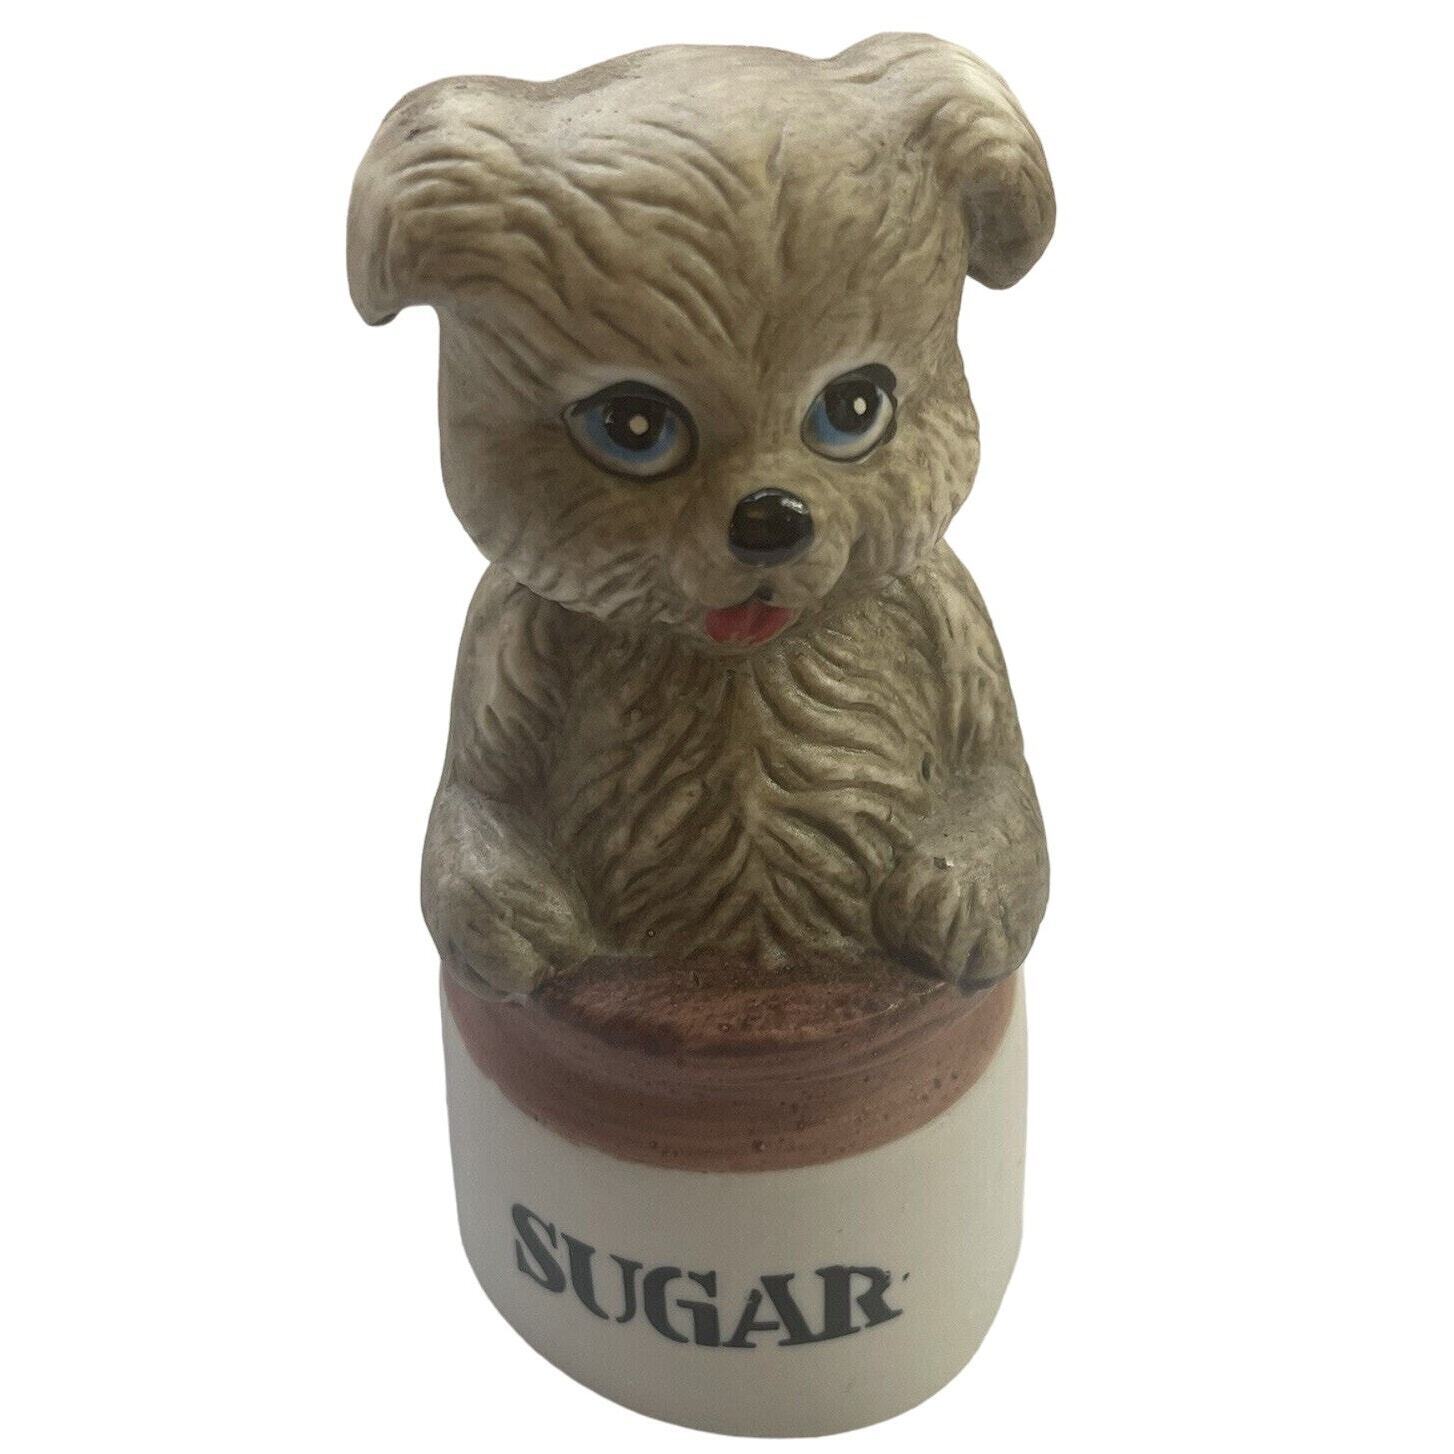 Vintage 1980s Jasco Critter Bells Sugar Cute Puppy Dog Bisque Porcelain Ceramic